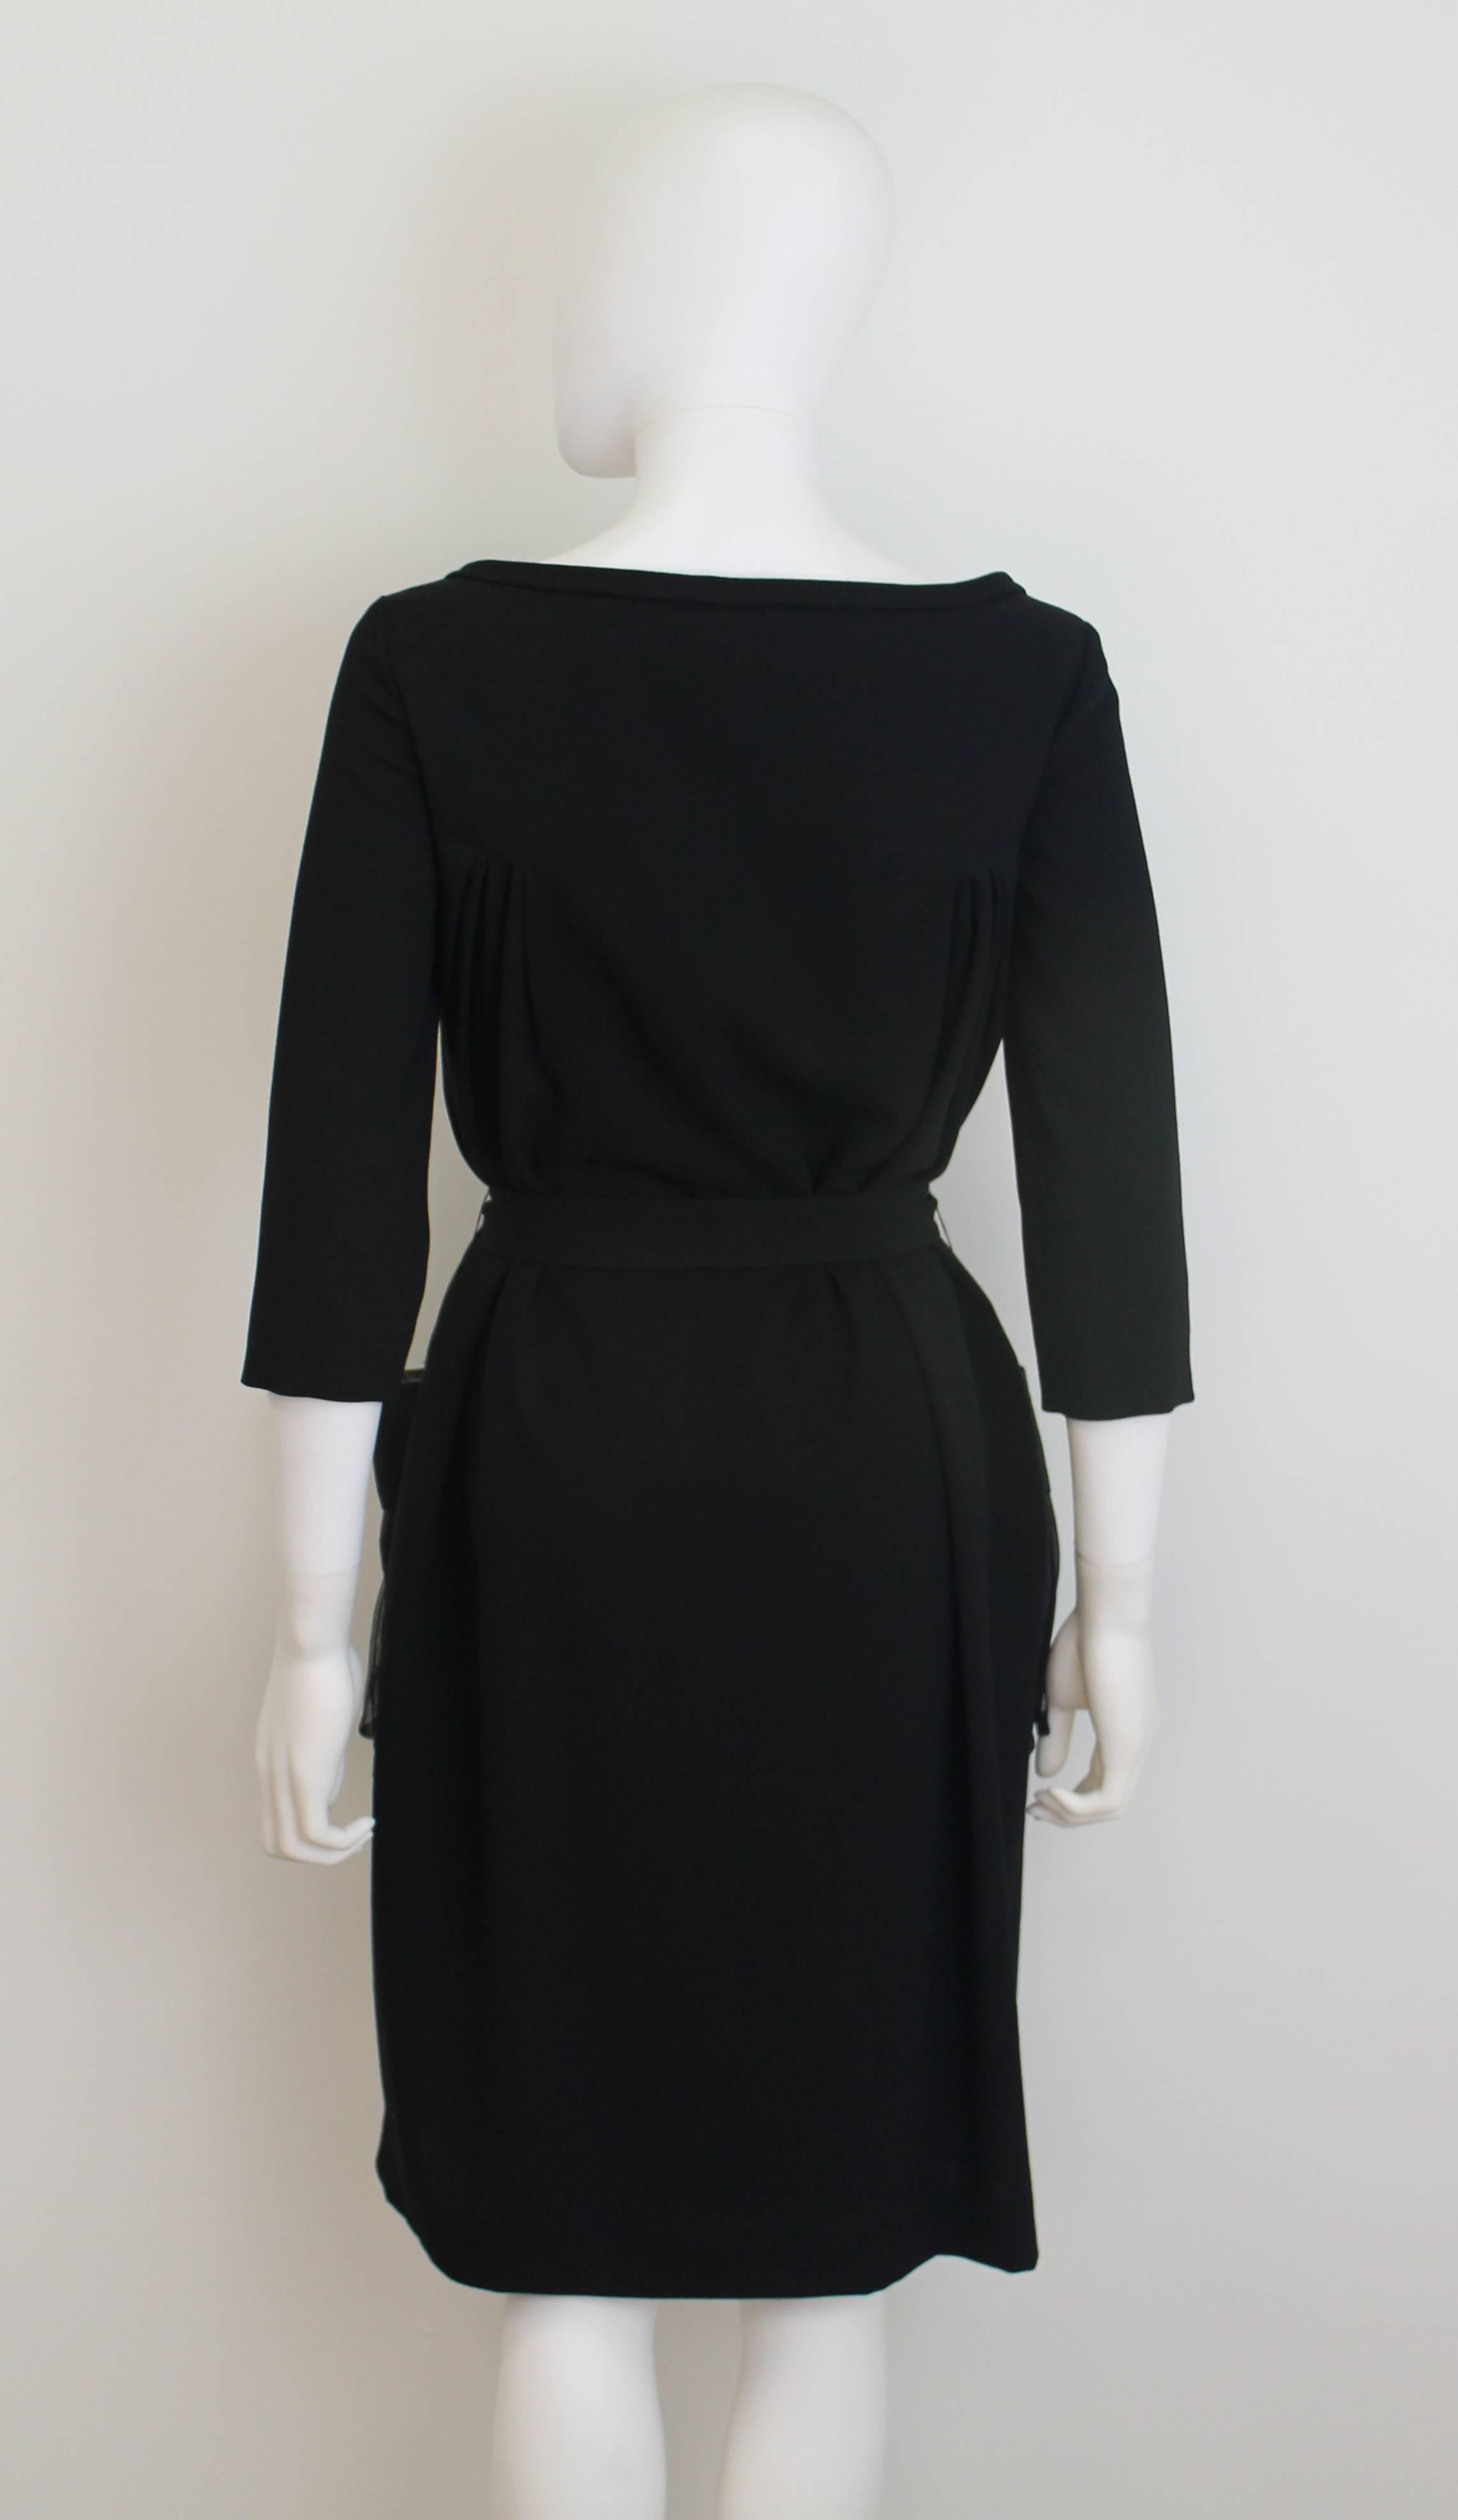 Women's Christian Dior Black Dress with Sheer Pockets